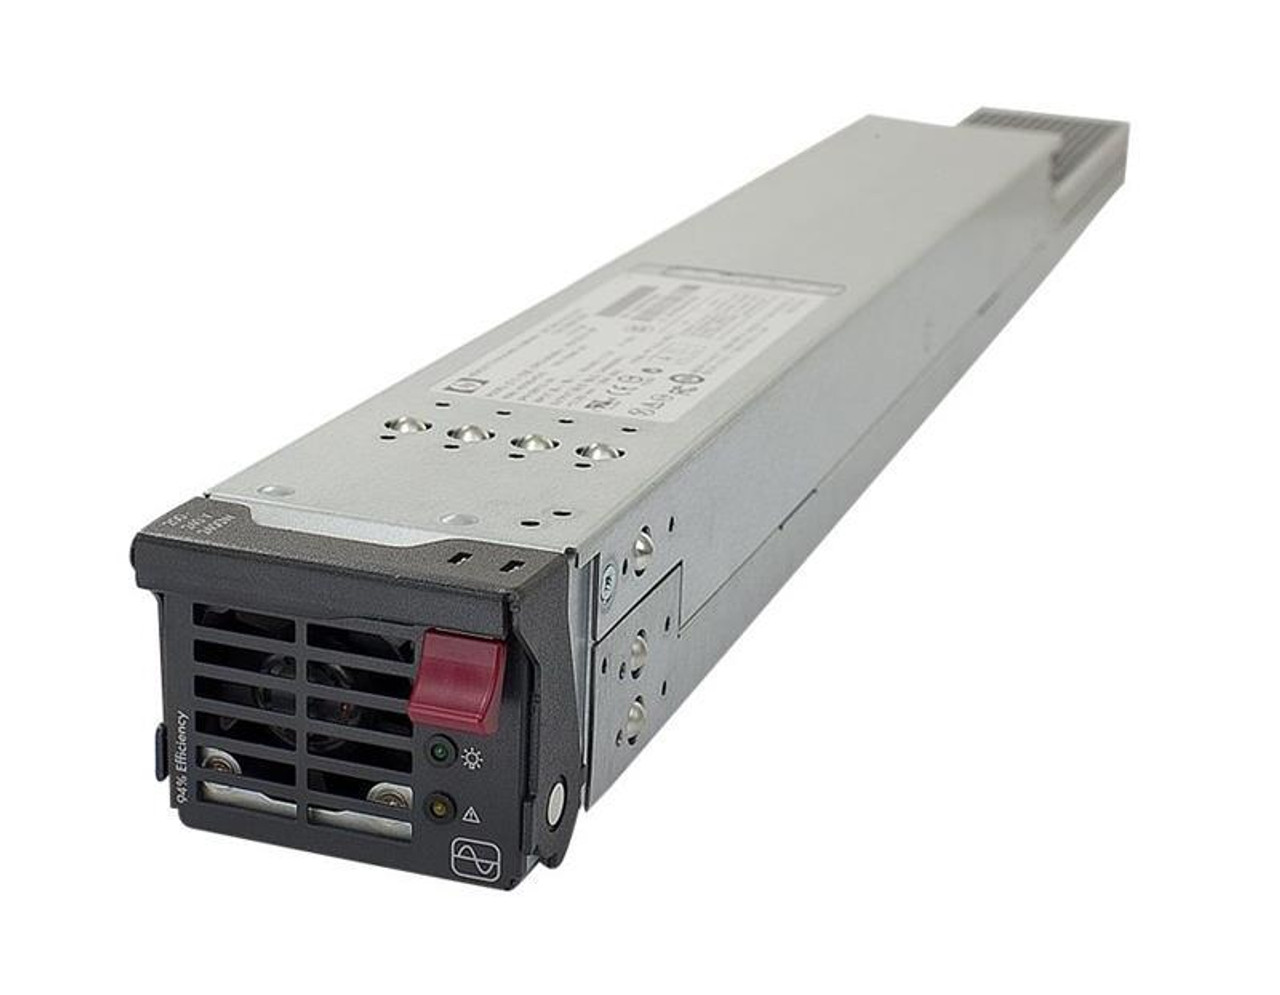 544660-001 HP 2250-Watts 48V DC Hot Swap Power Supply for BladeSystem C7000 Enclosure